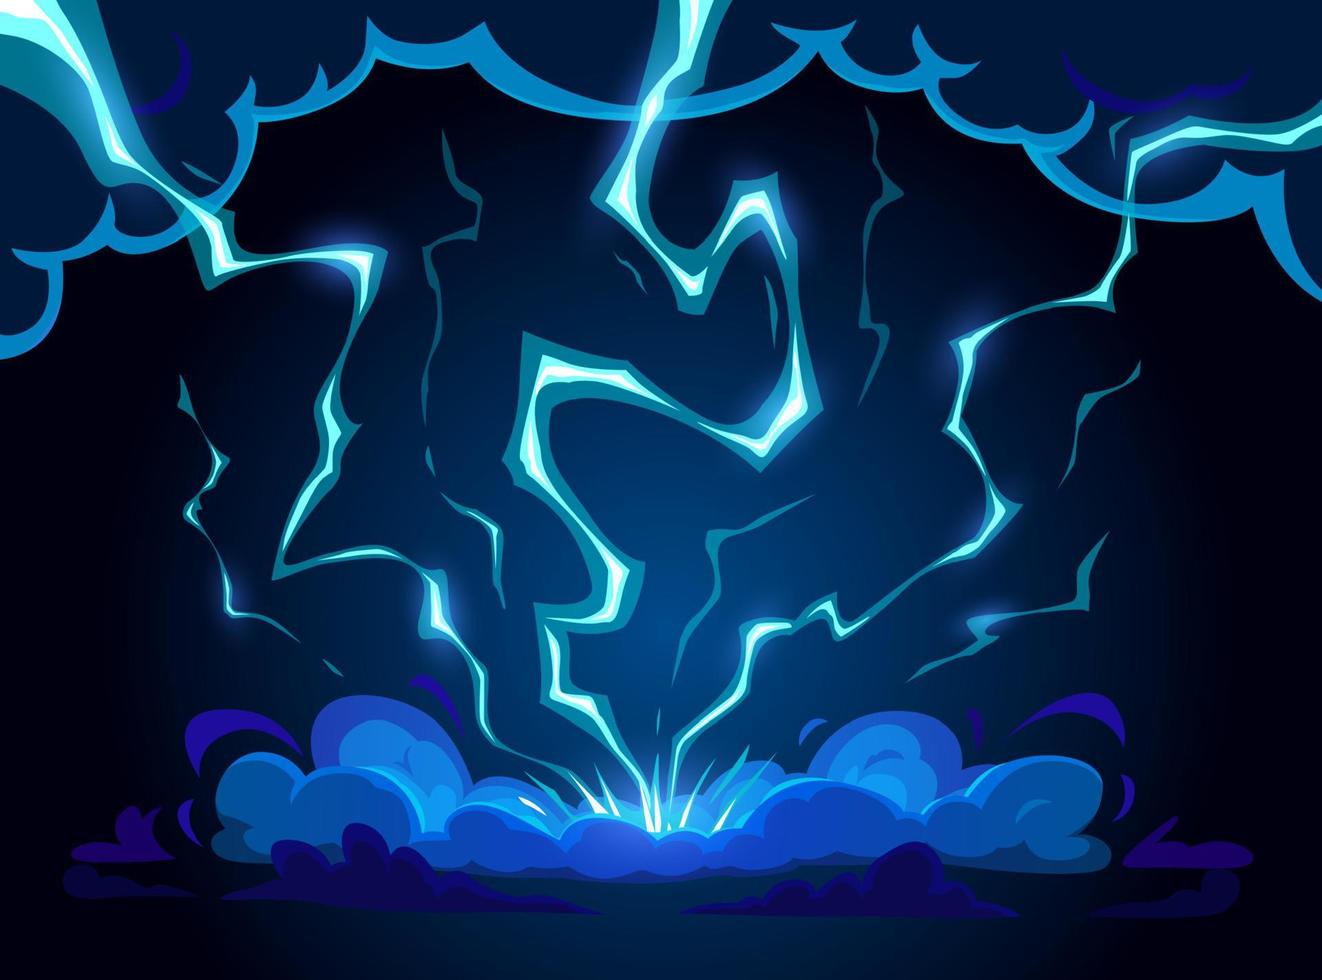 relámpago azul de dibujos animados, descarga de tormenta vector